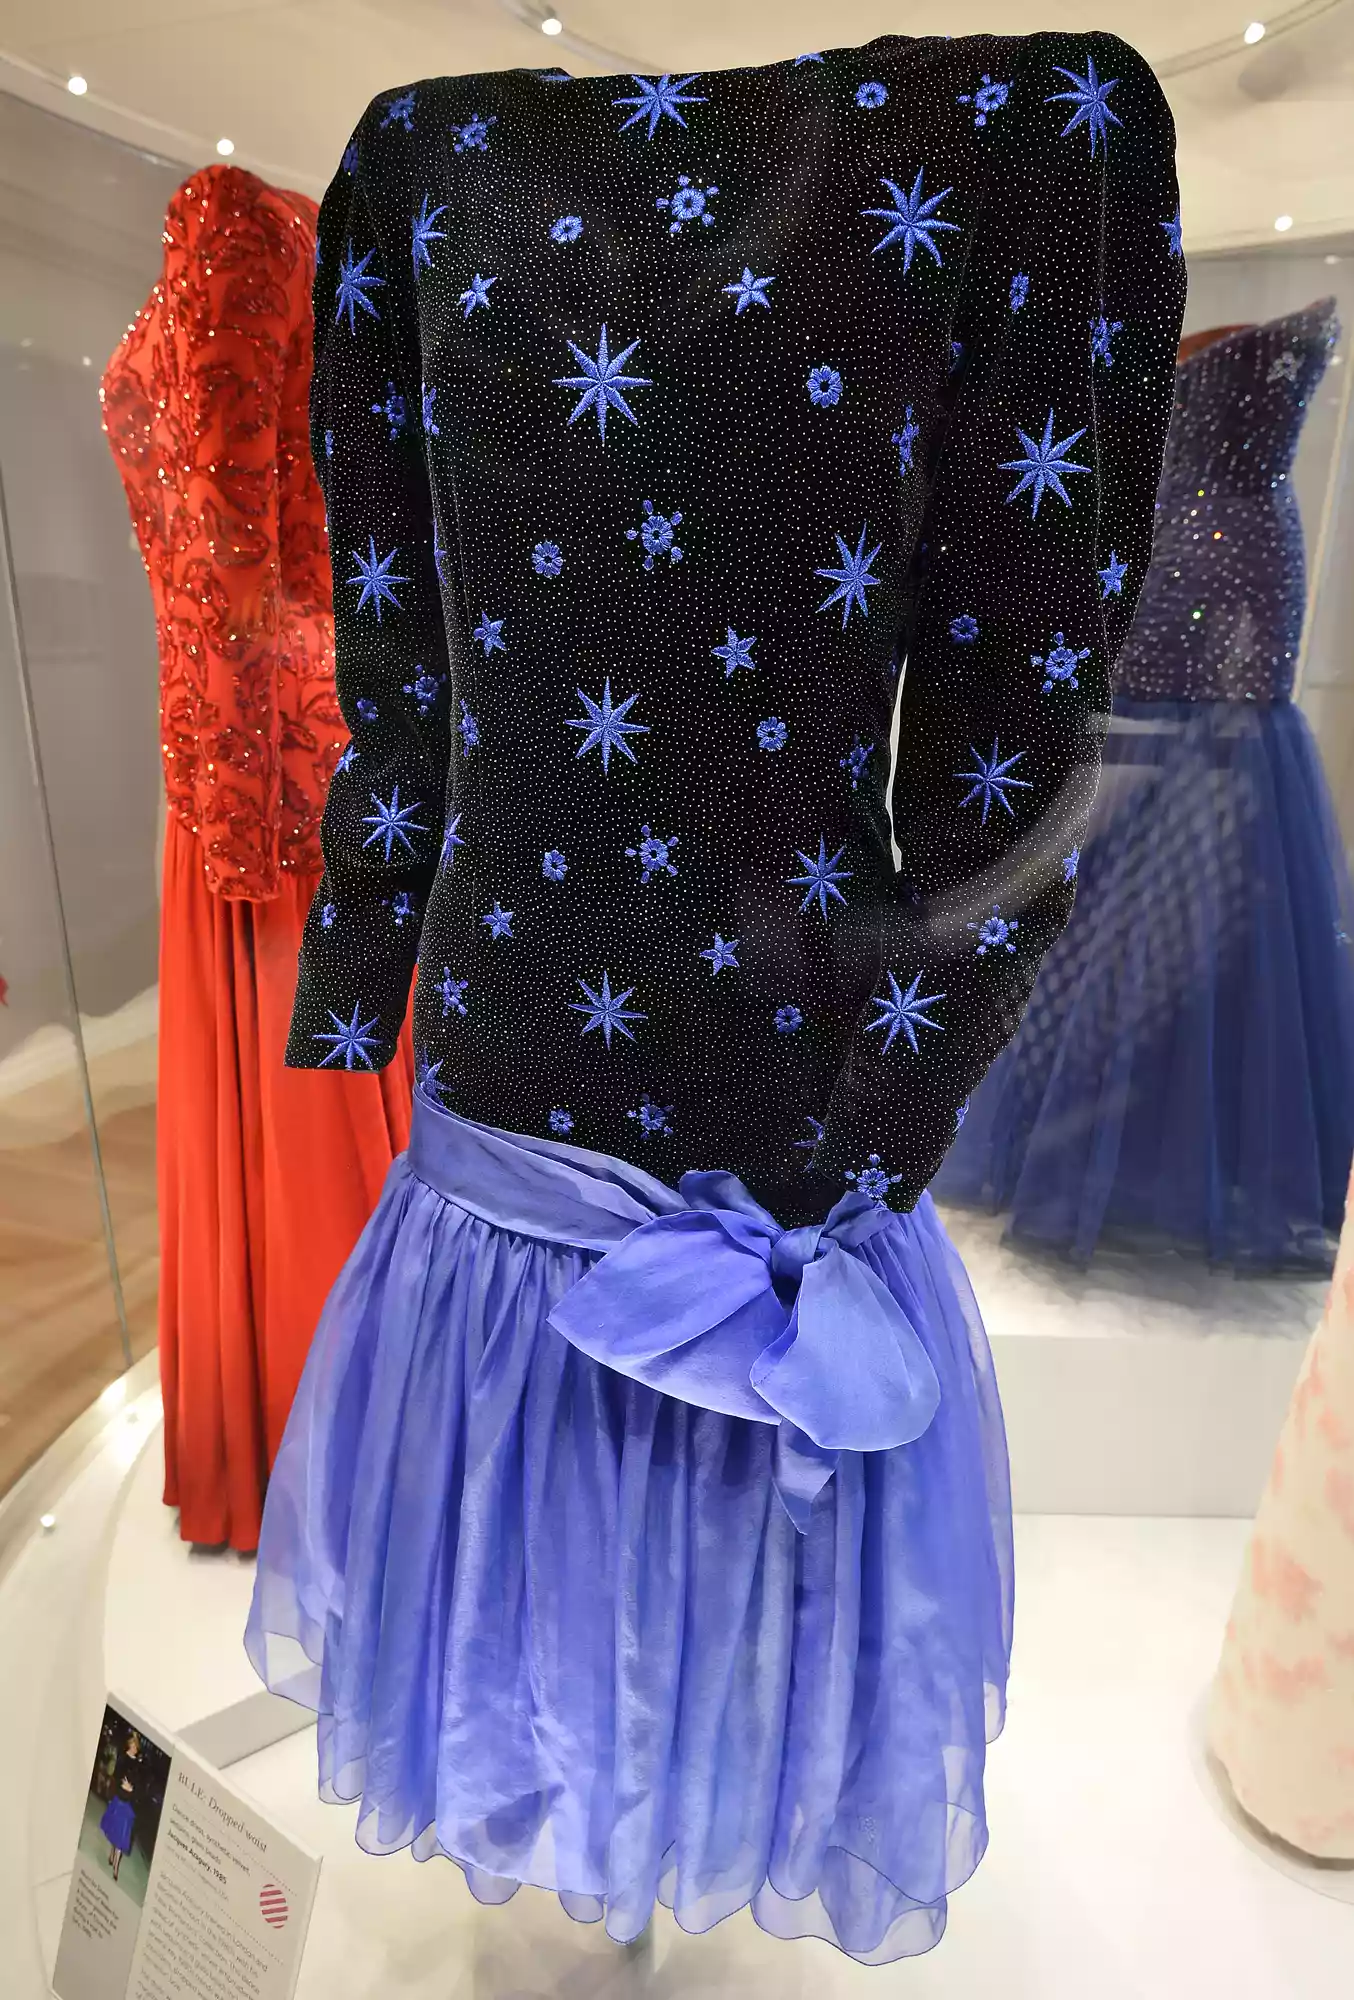 Princess Diana dress sold at auction